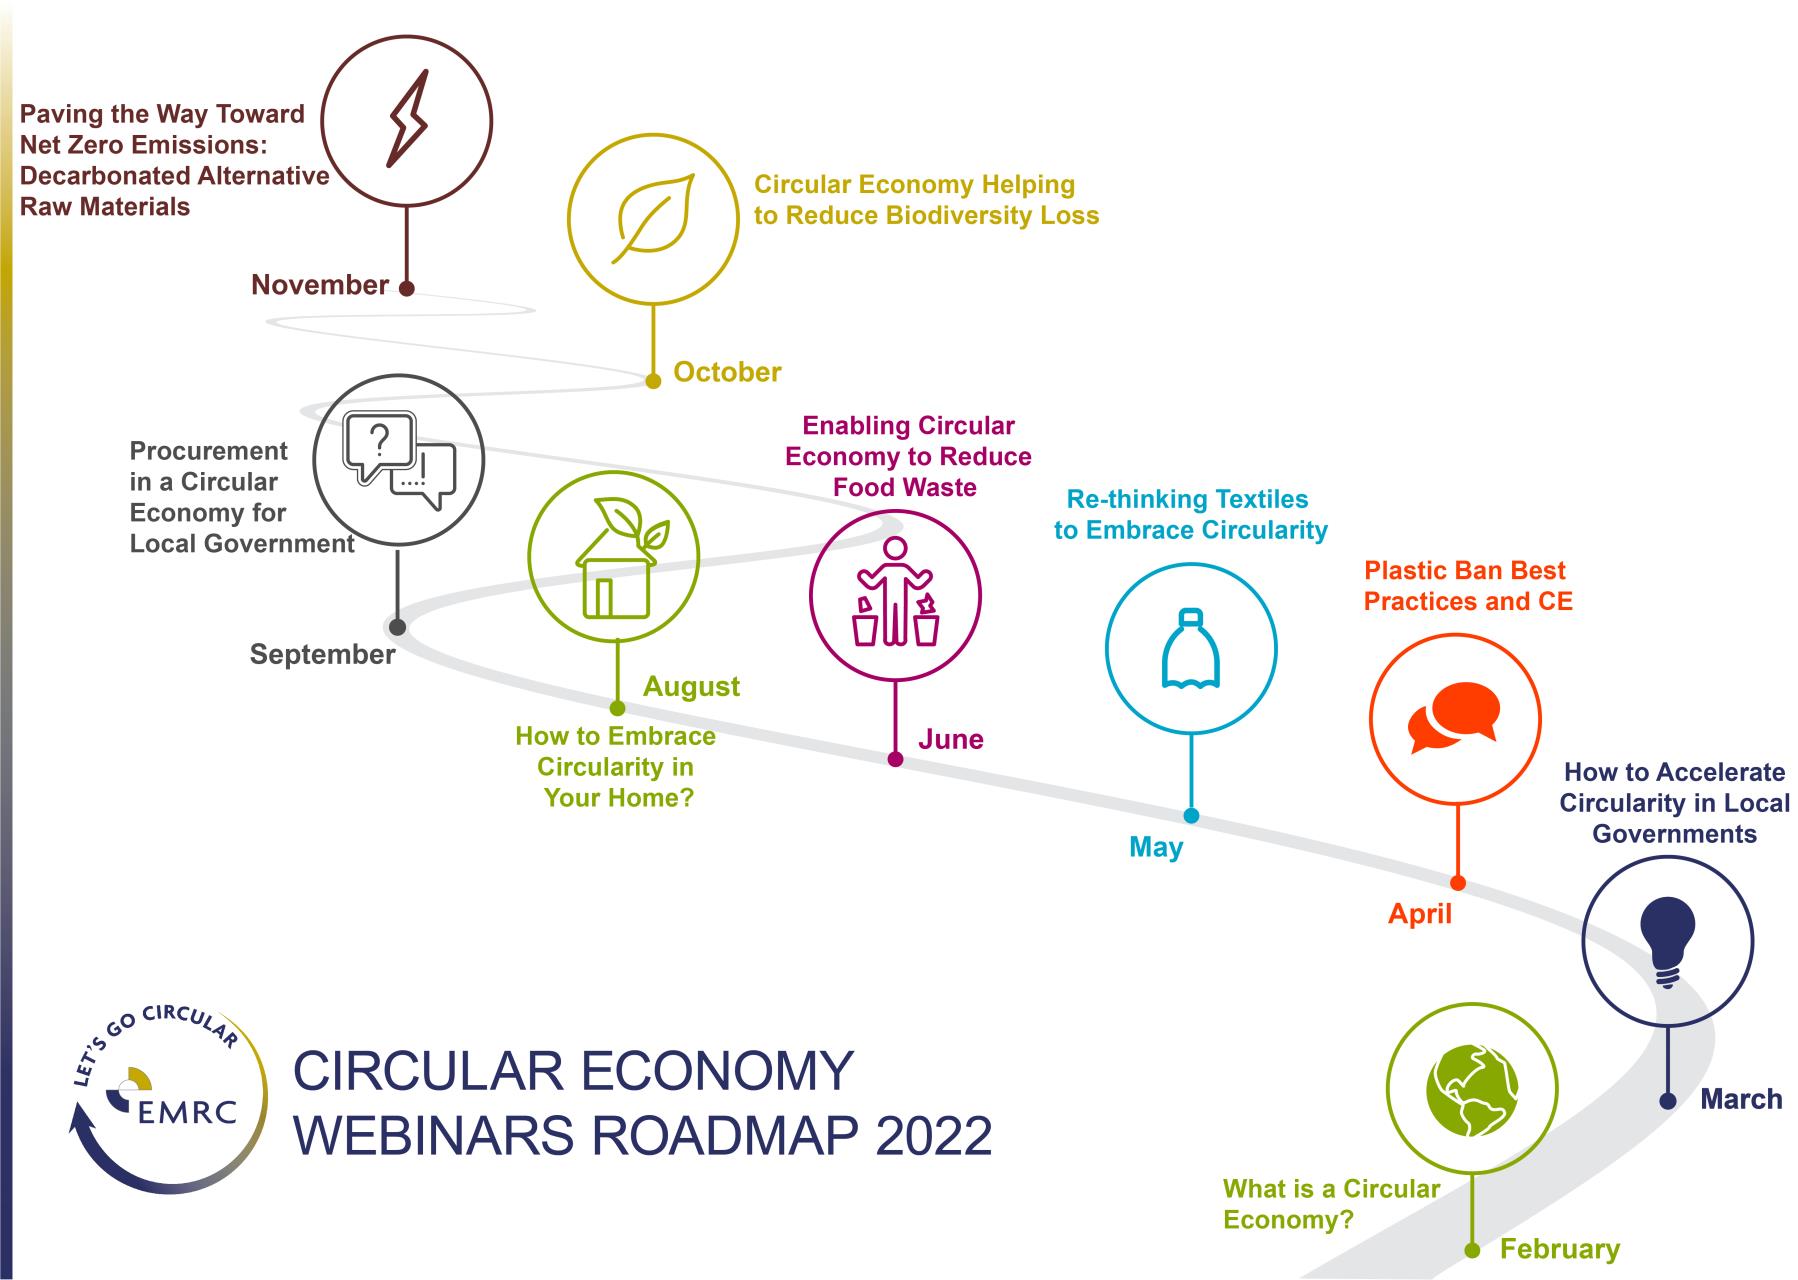 EMRC launches Circular Economy Webinar Roadmap 2022